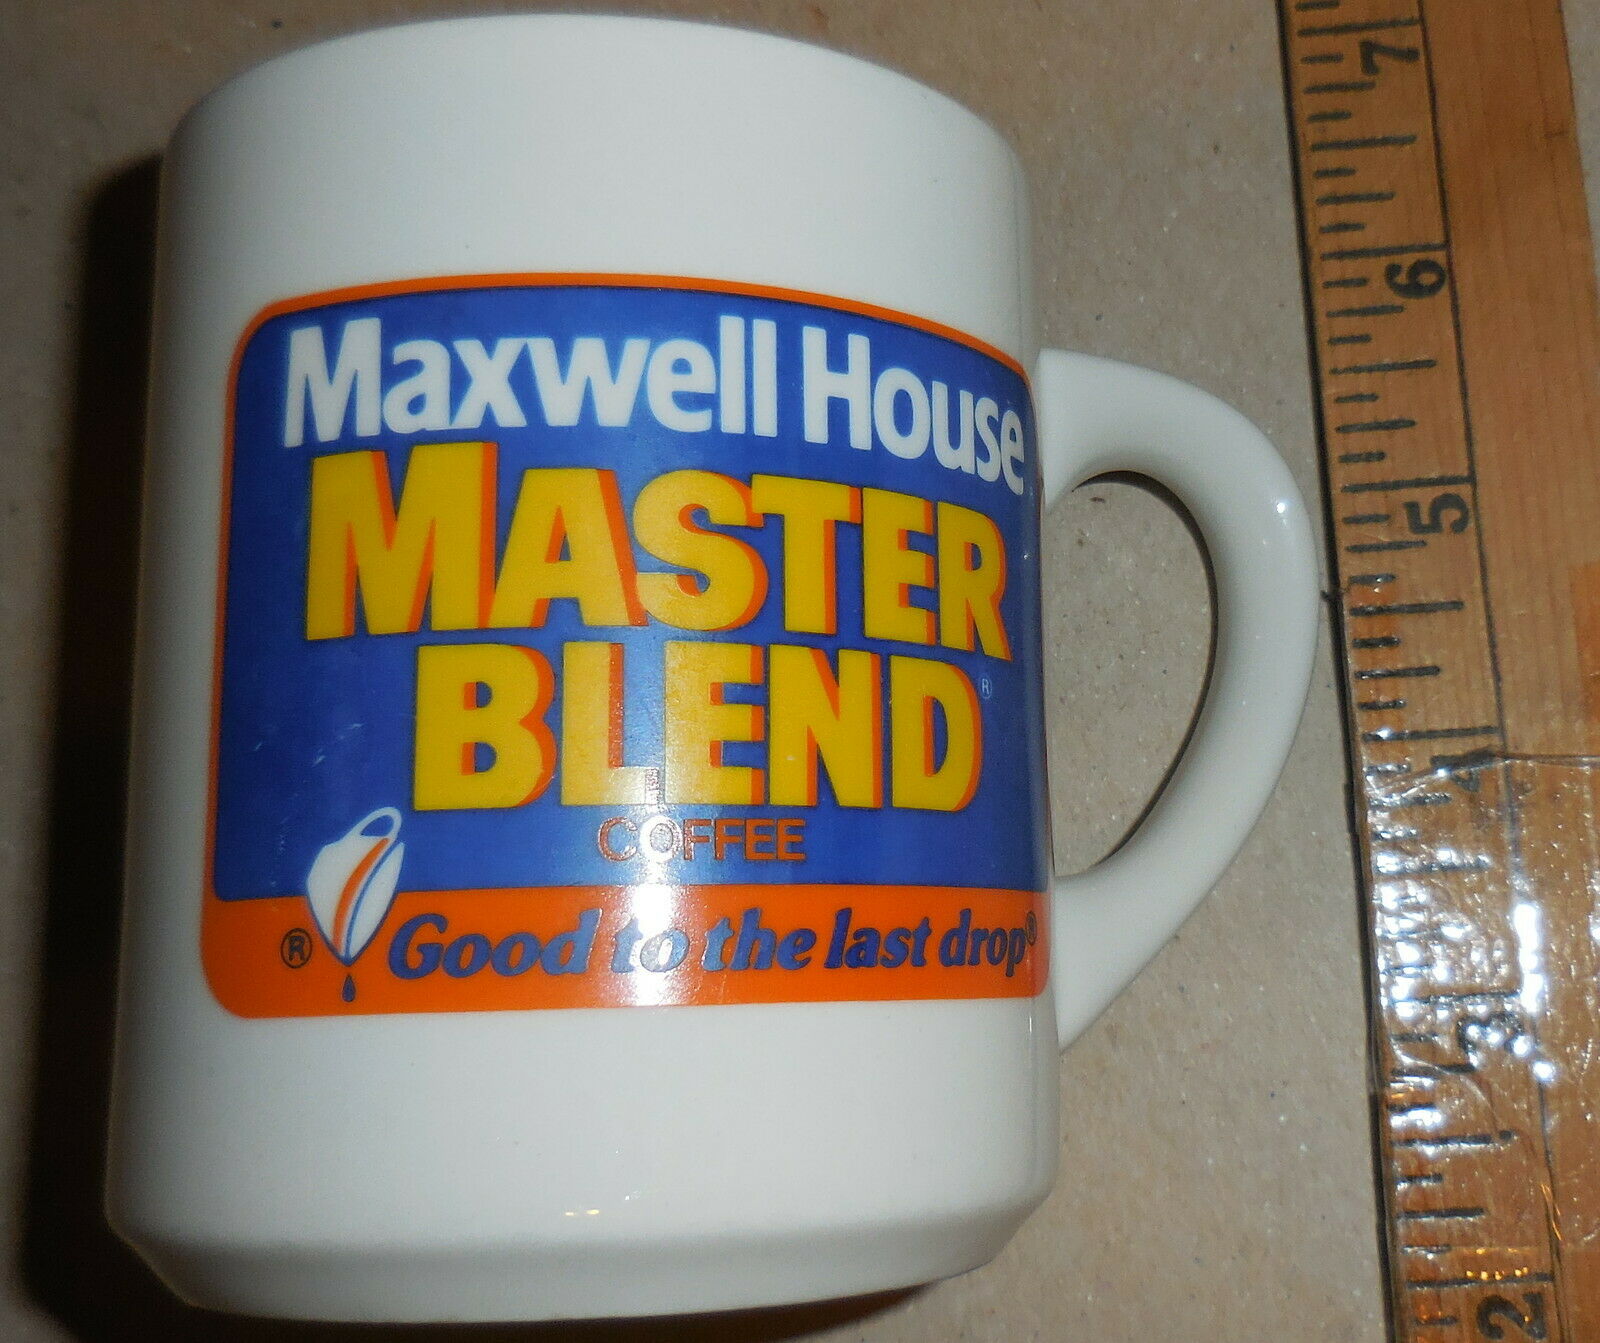 Vintage Maxwell House Master Blend Coffee Mug Cup Good To Last Drop